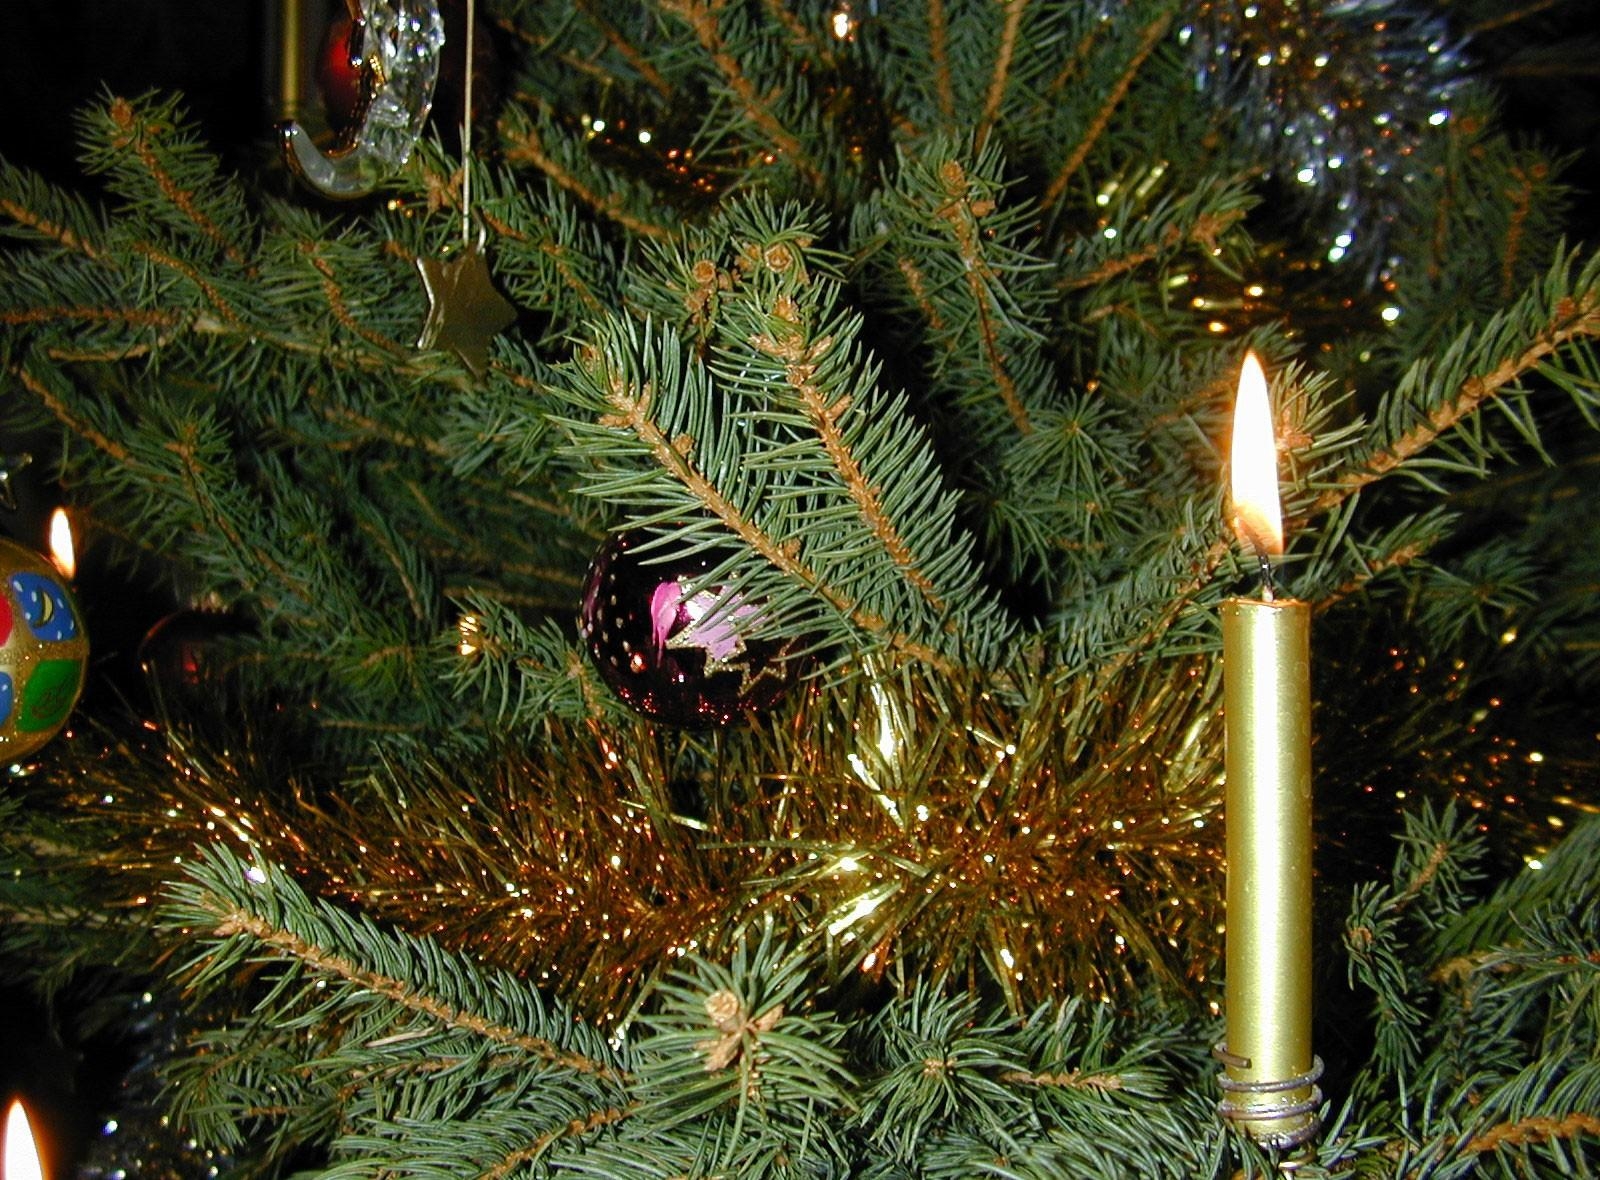 holidays, toys, holiday, needles, christmas tree, tinsel, candle